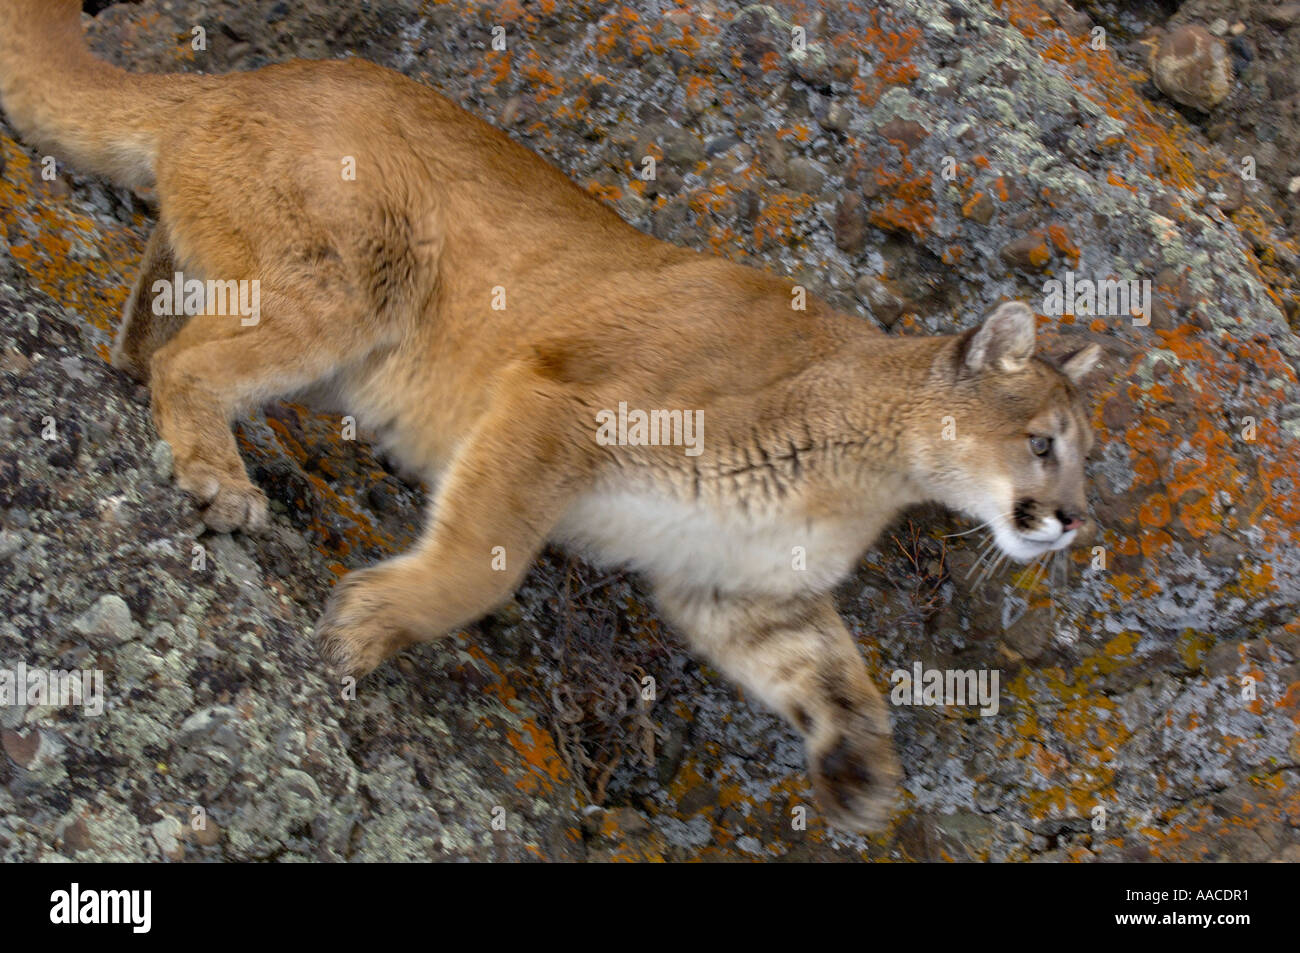 Cougar OR Puma OR Mountain Lion Puma concolor Felis concolor Leaping down rocks Stock Photo